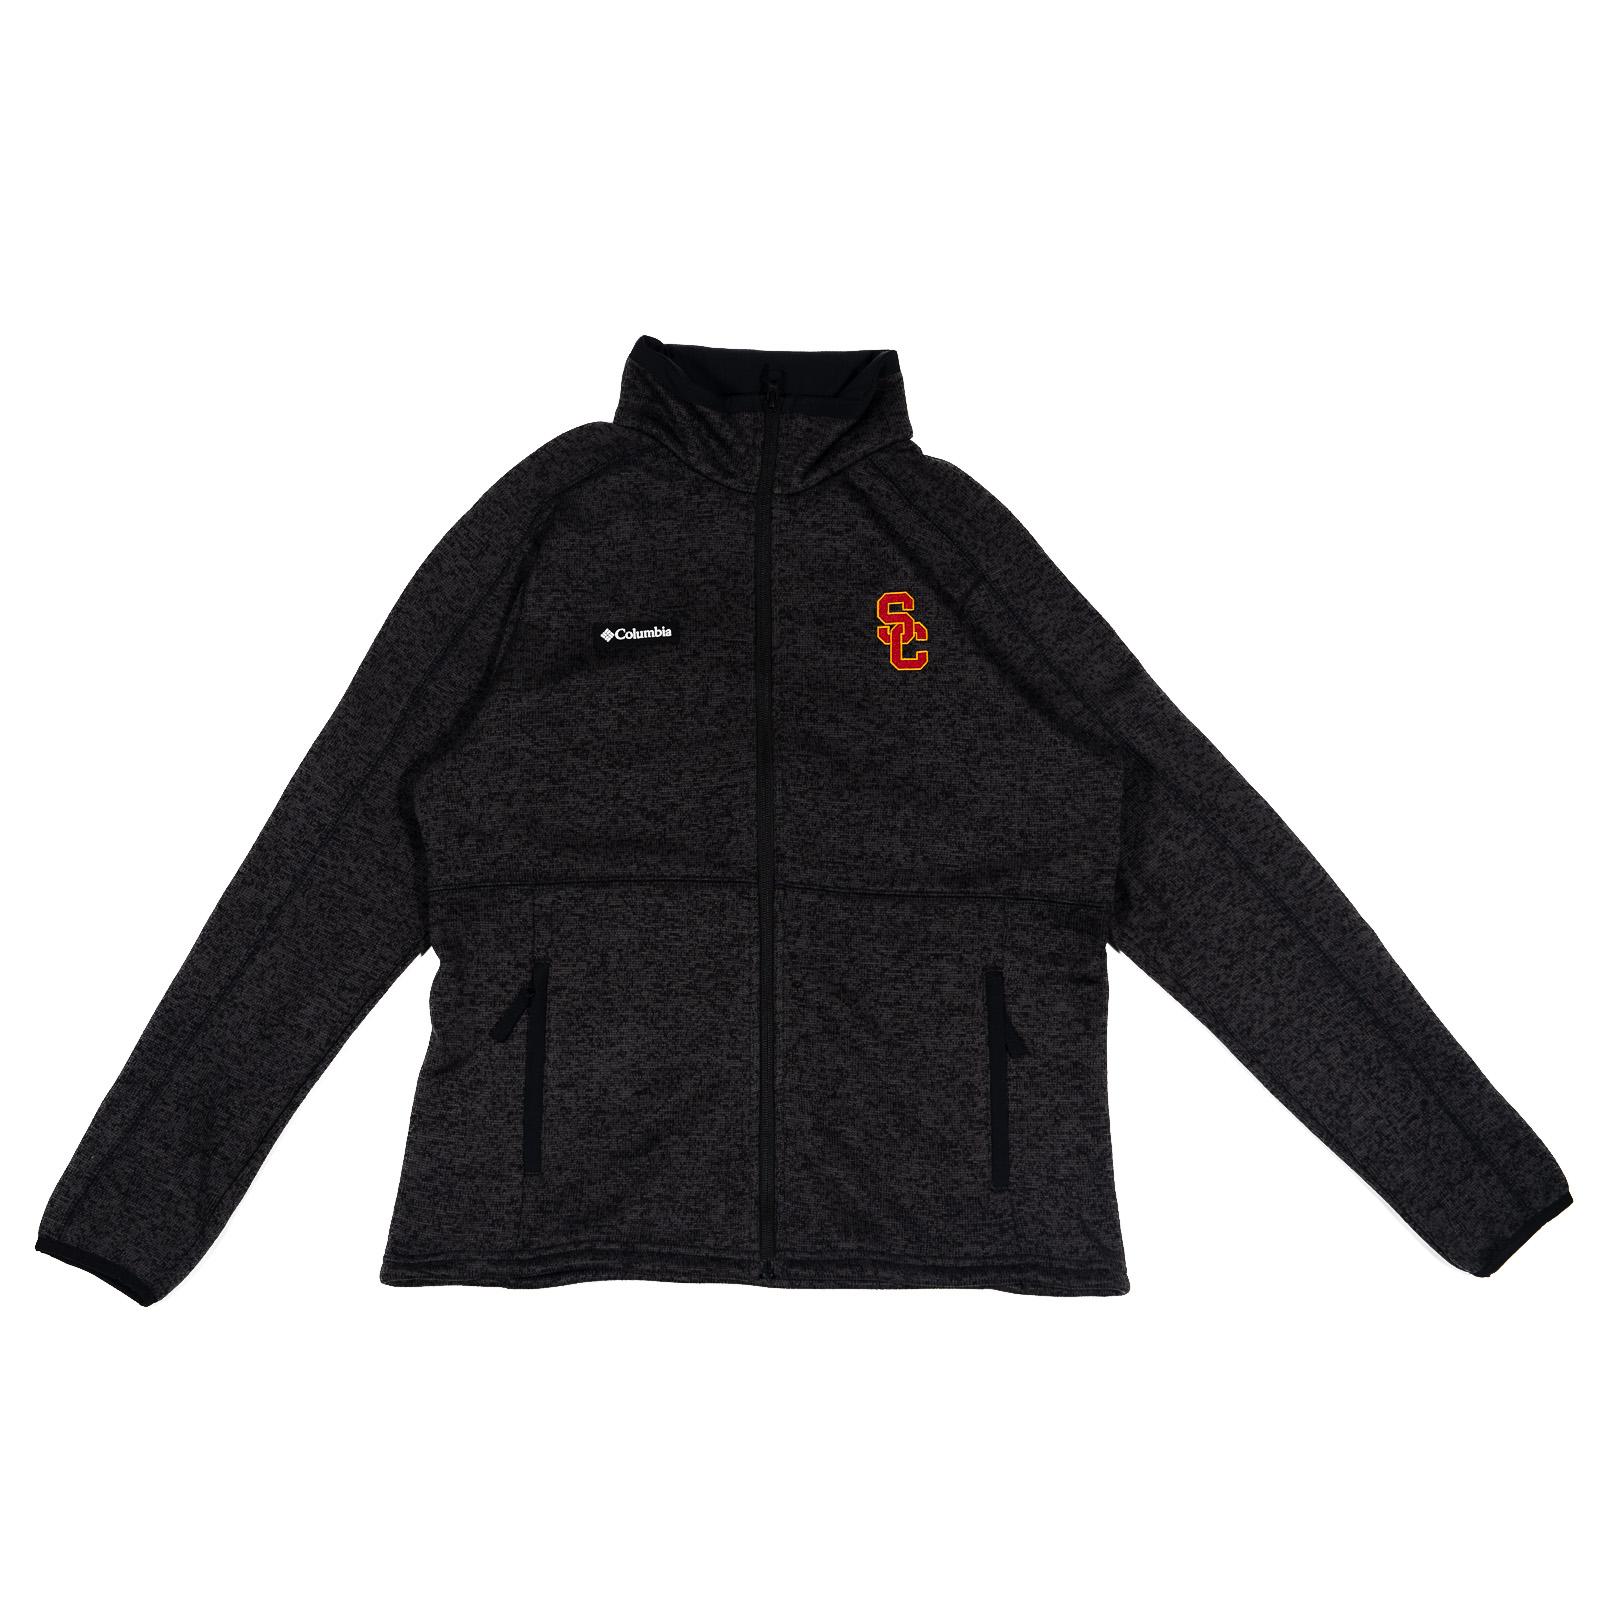 SC Interlock Womens Sweater Weather Fleece Full Zip Jacket Black image01